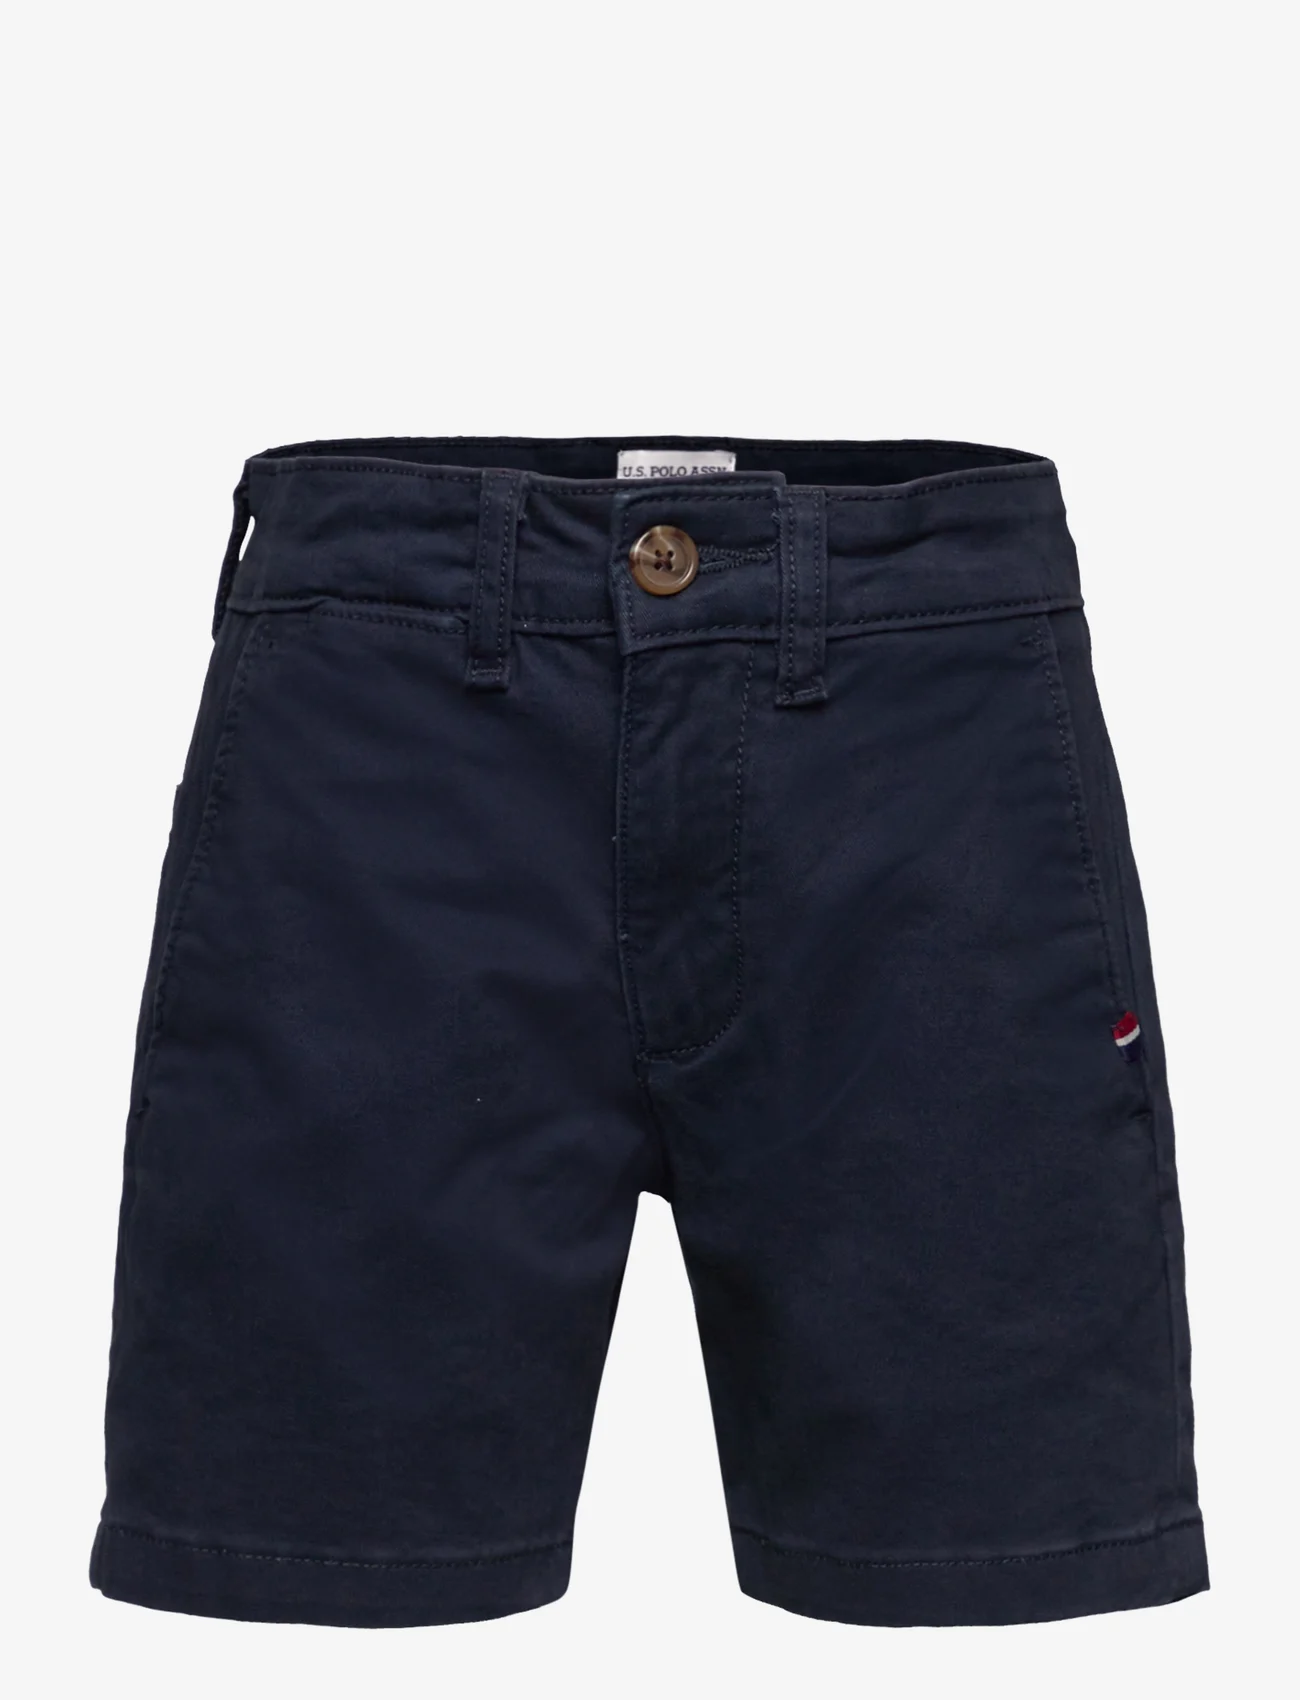 U.S. Polo Assn. - USPA Classic Chino Shorts - chino-shorts - dark sapphire navy / haute red dhm - 0